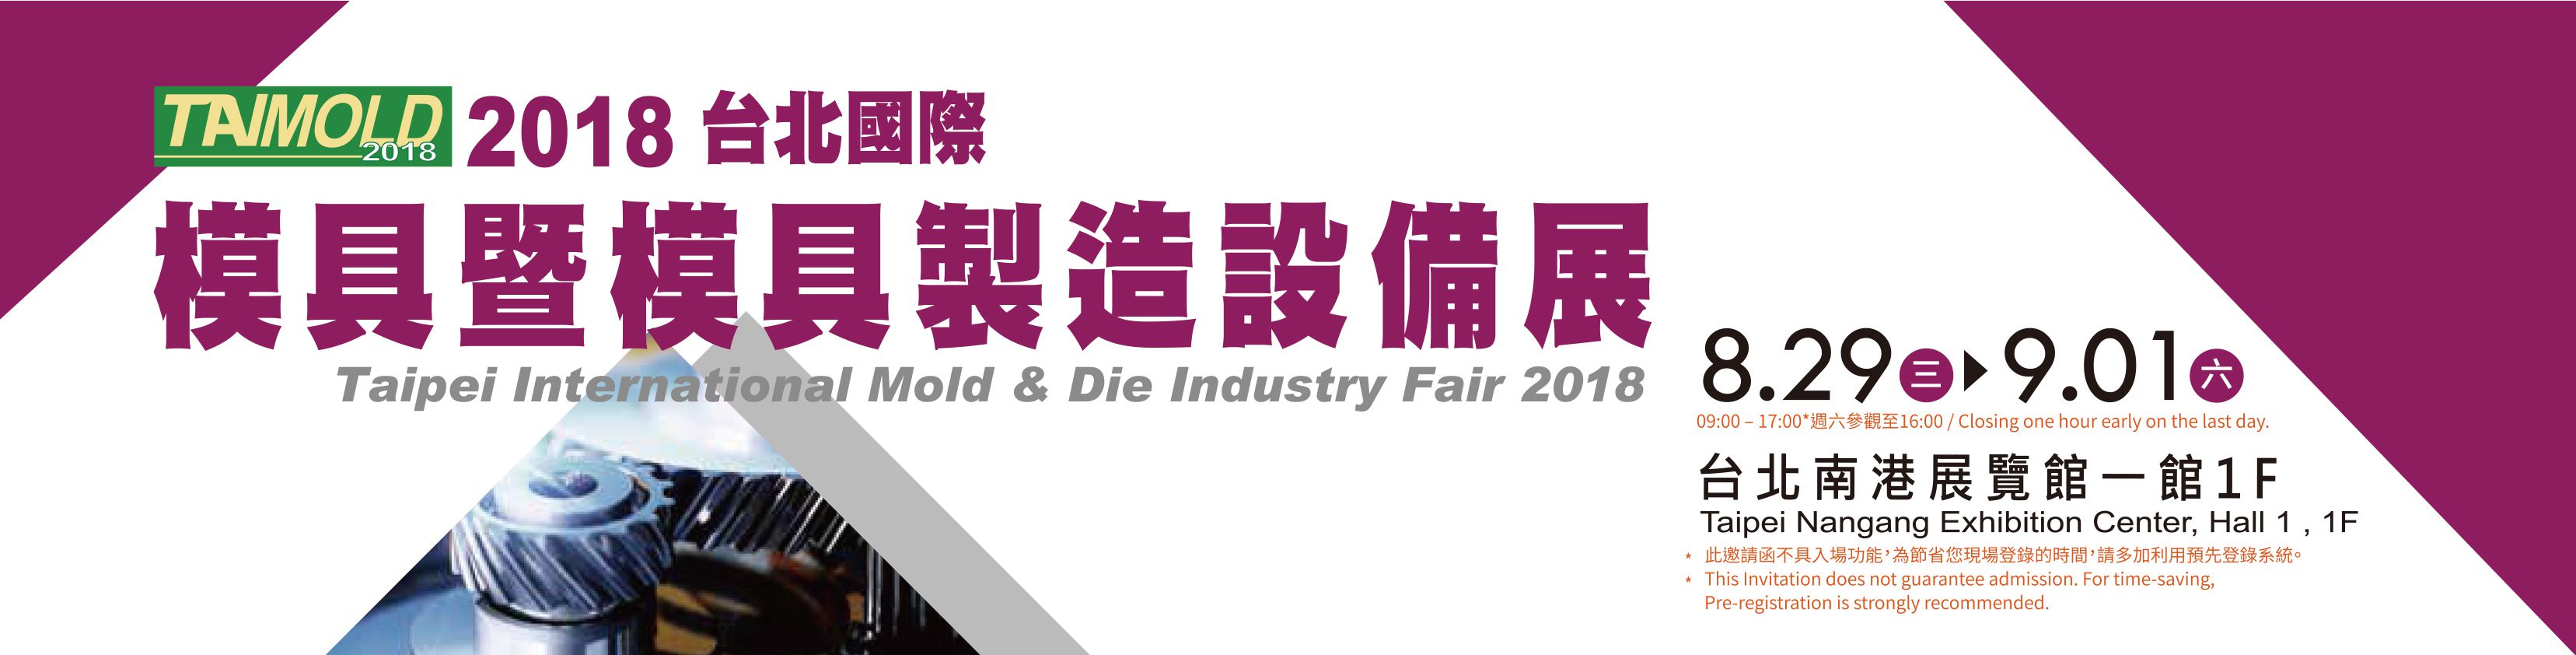 Taipei Int'l Mold & Die Industry Fair 2018